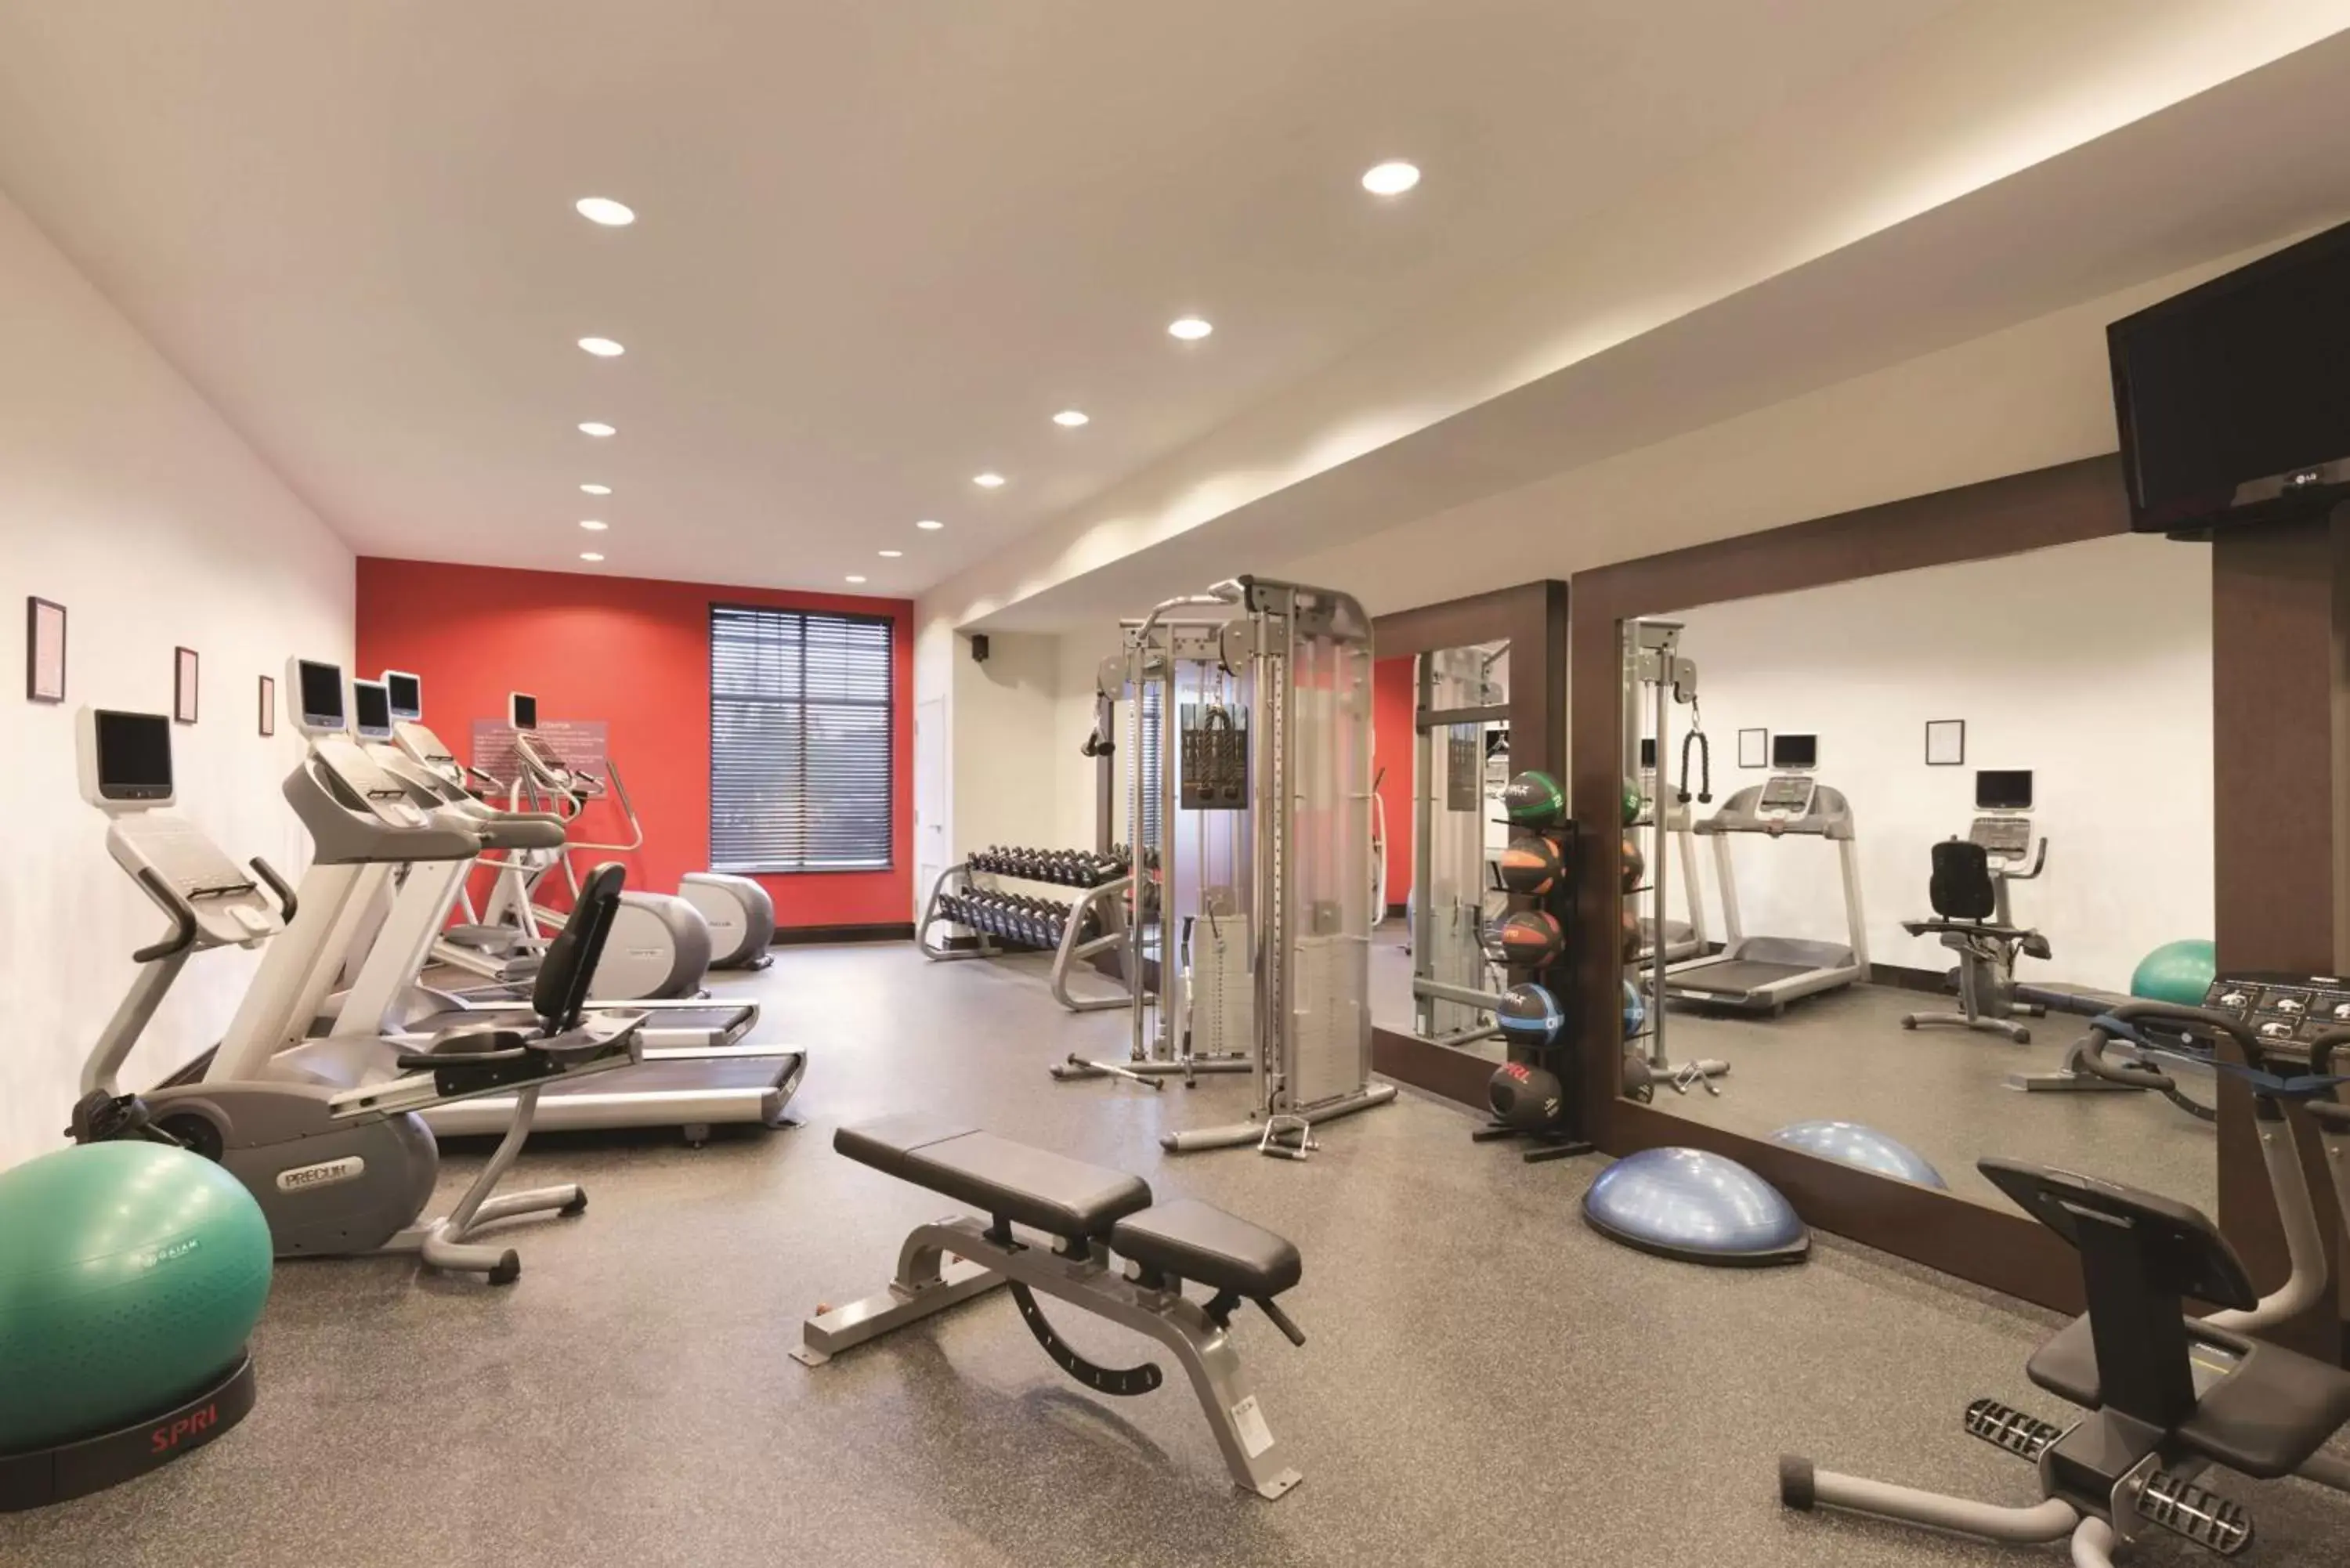 Fitness centre/facilities, Fitness Center/Facilities in Hilton Garden Inn Fargo